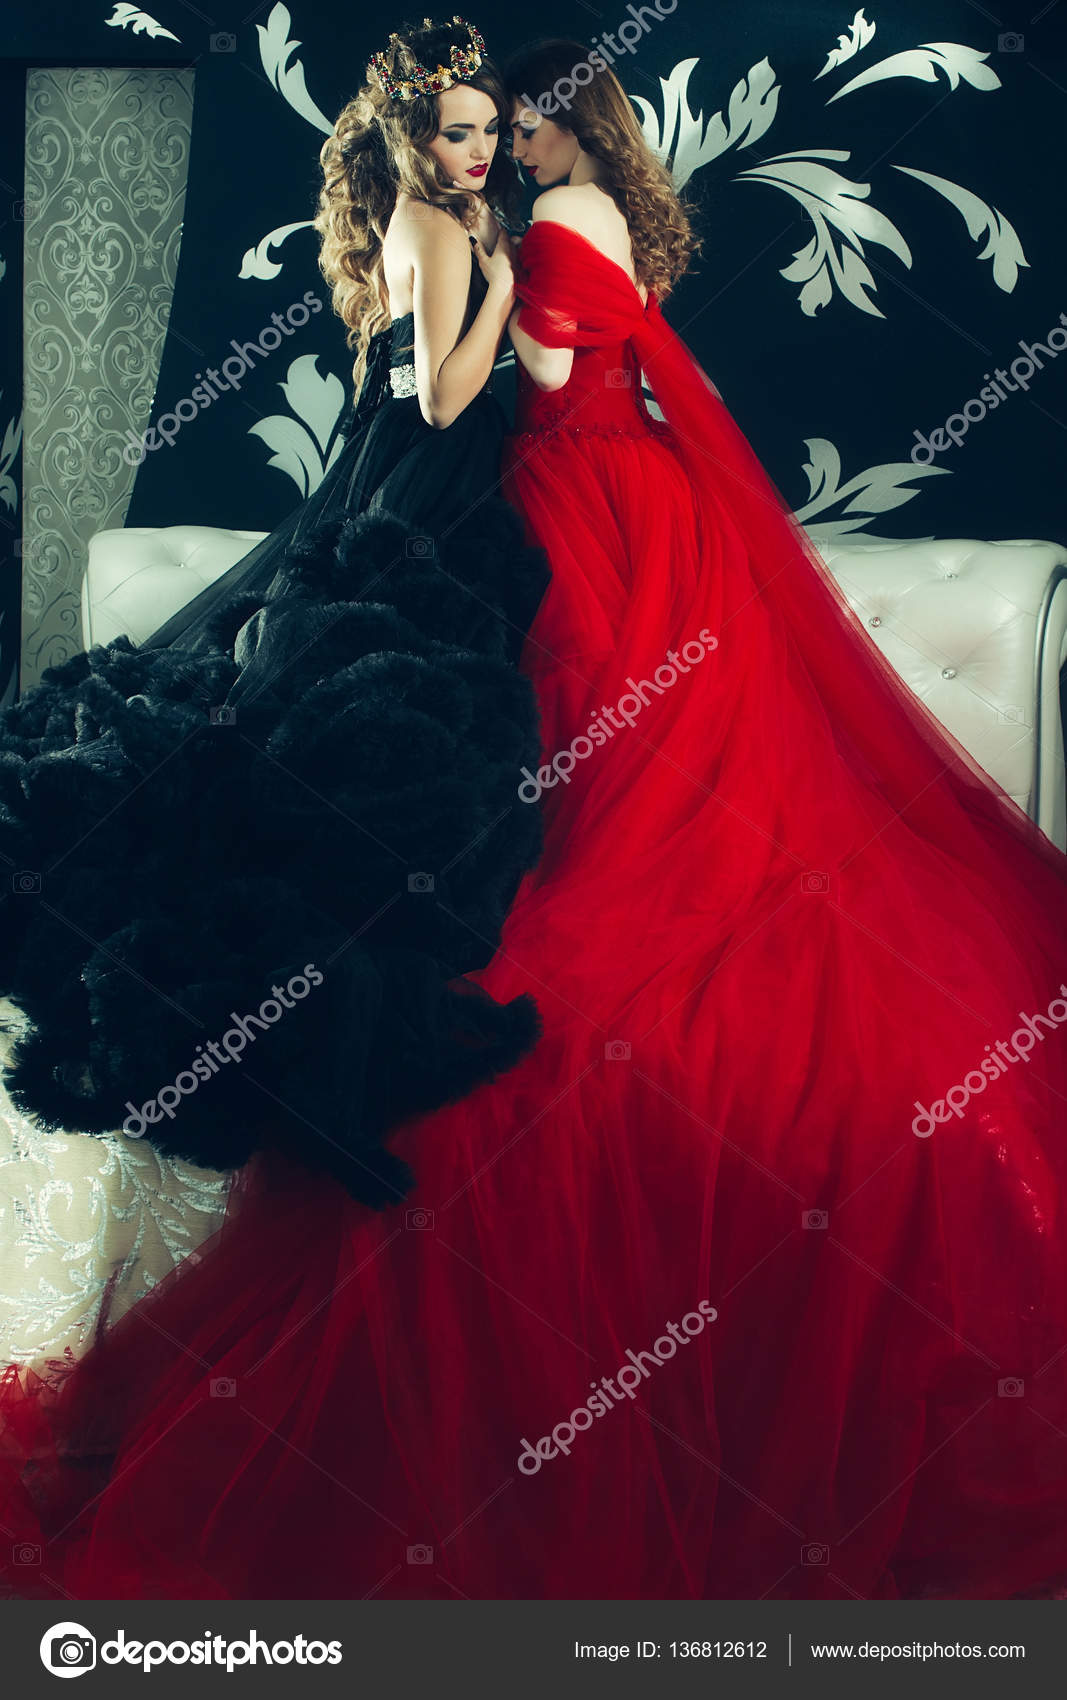 Intuición Poderoso compromiso Mujeres bonitas en vestidos elegantes: fotografía de stock © Tverdohlib.com  #136812612 | Depositphotos